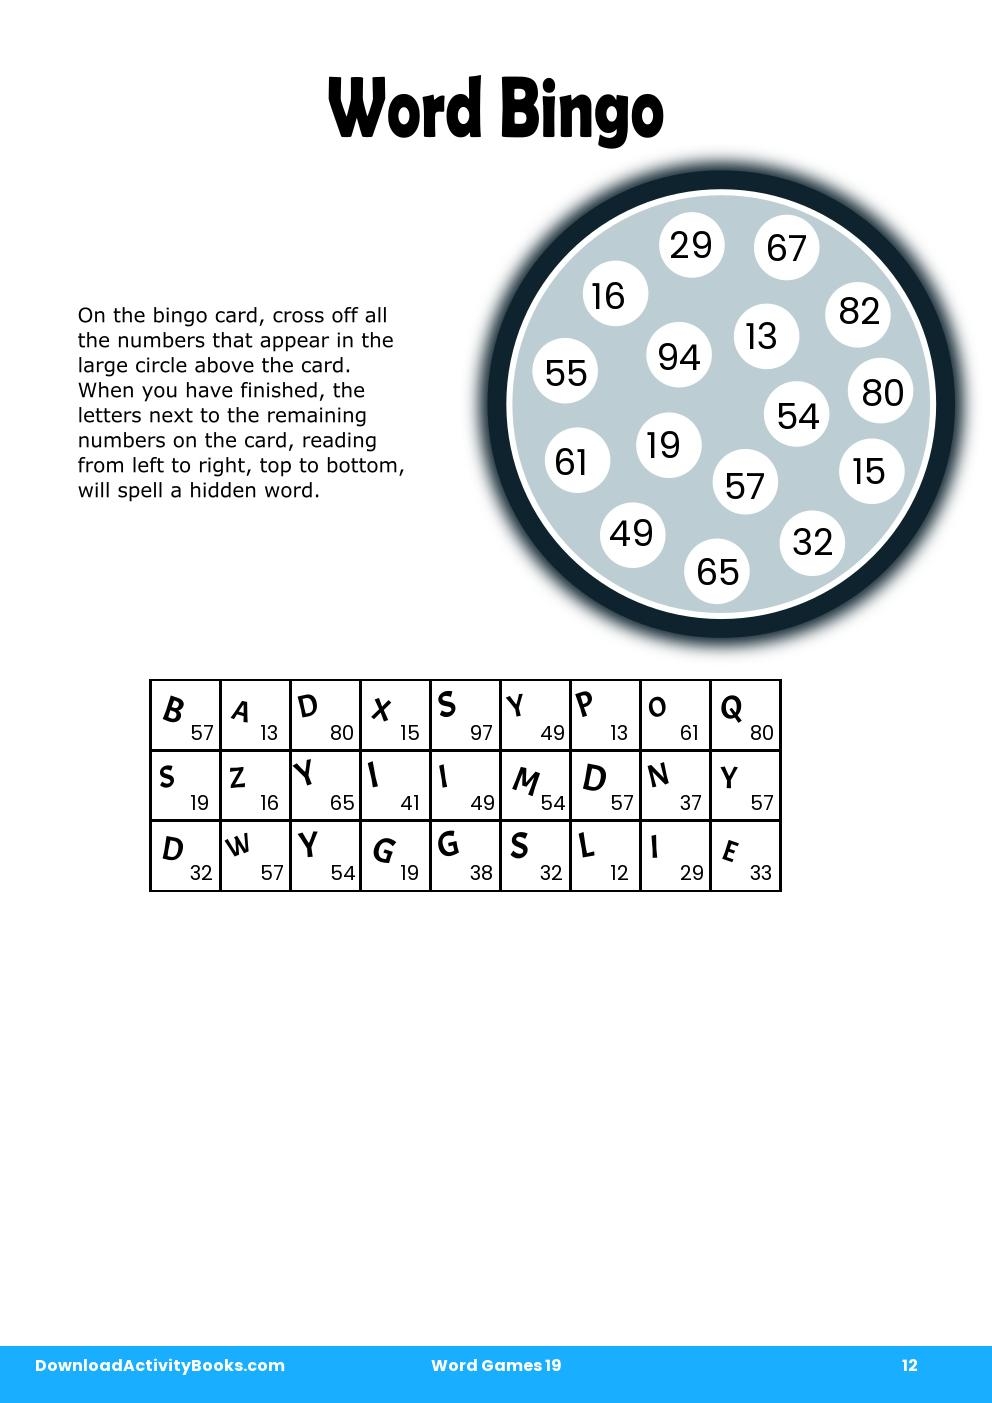 Word Bingo in Word Games 19